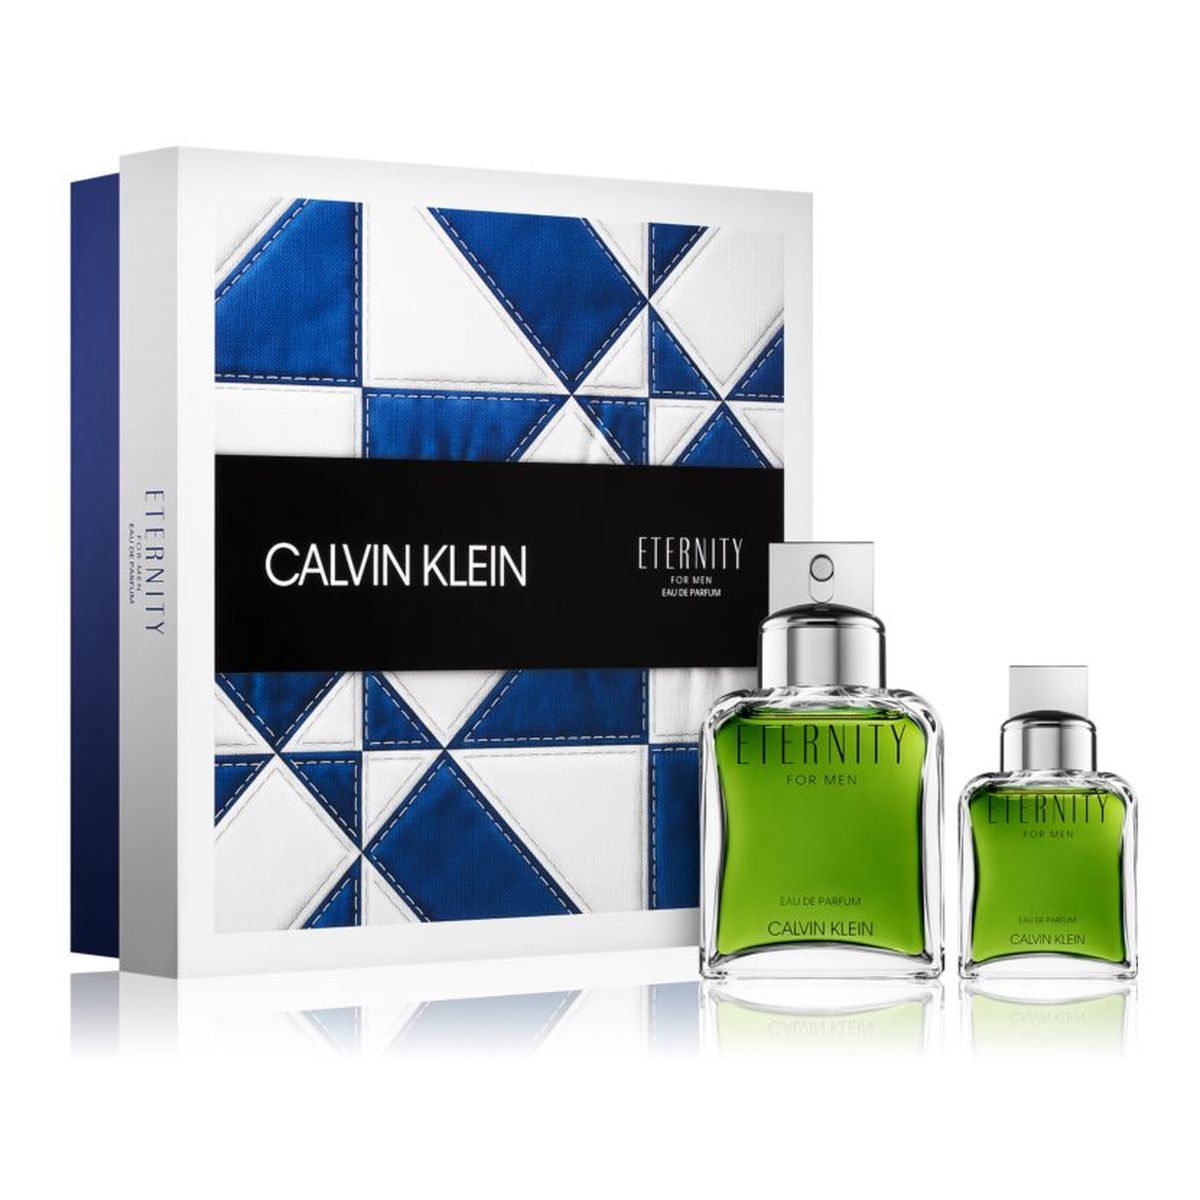 Calvin Klein Eternity For Men zestaw (woda perfumowana 100ml + woda perfumowana 30ml)